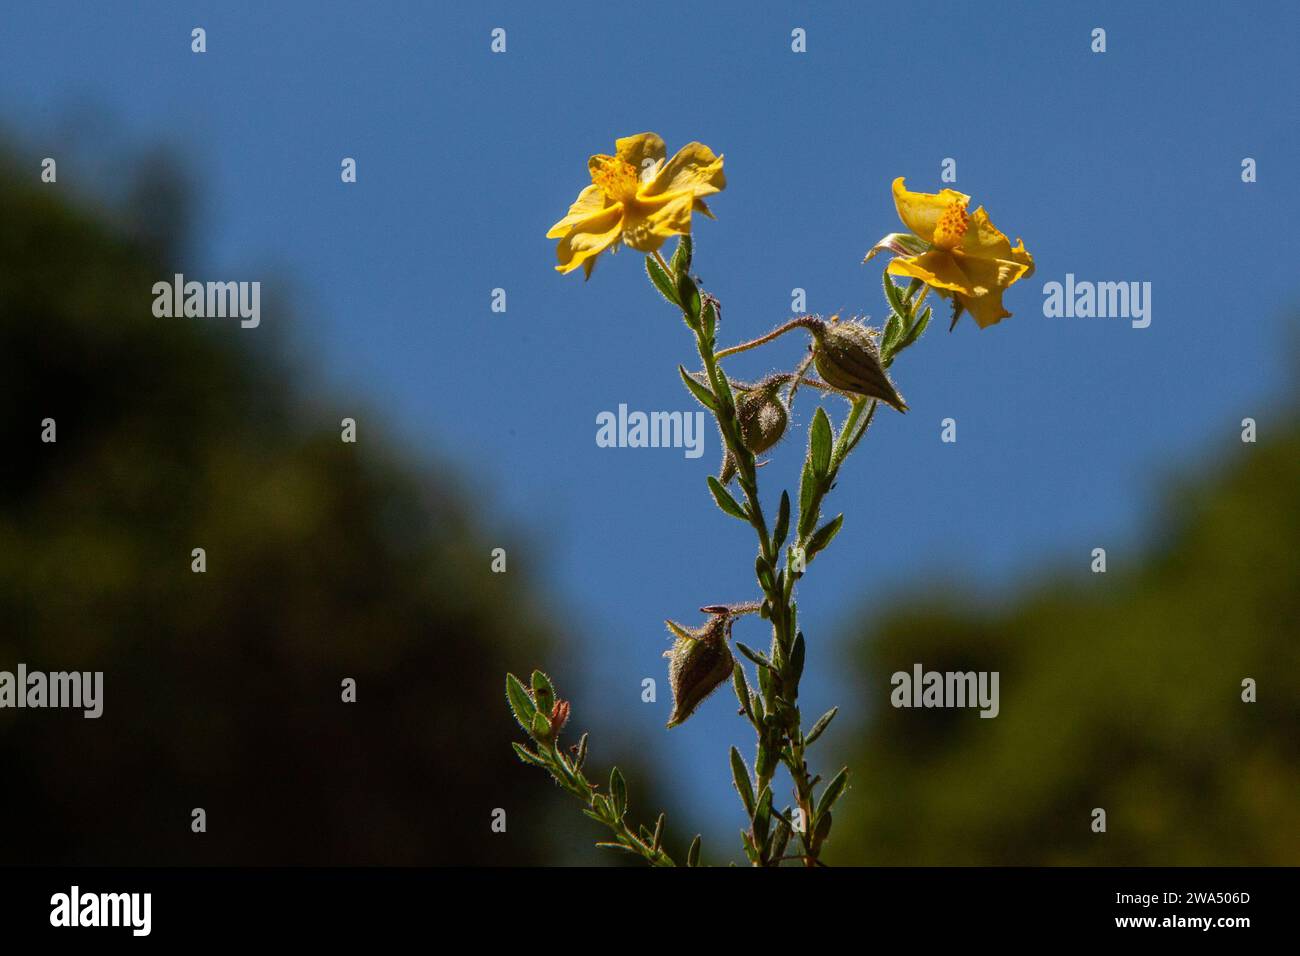 Helianthemum stipulatum known as rock rose, sunrose, rushrose, or frostweed Photographed in the Mediterranean Coastal plains, Israel Stock Photo